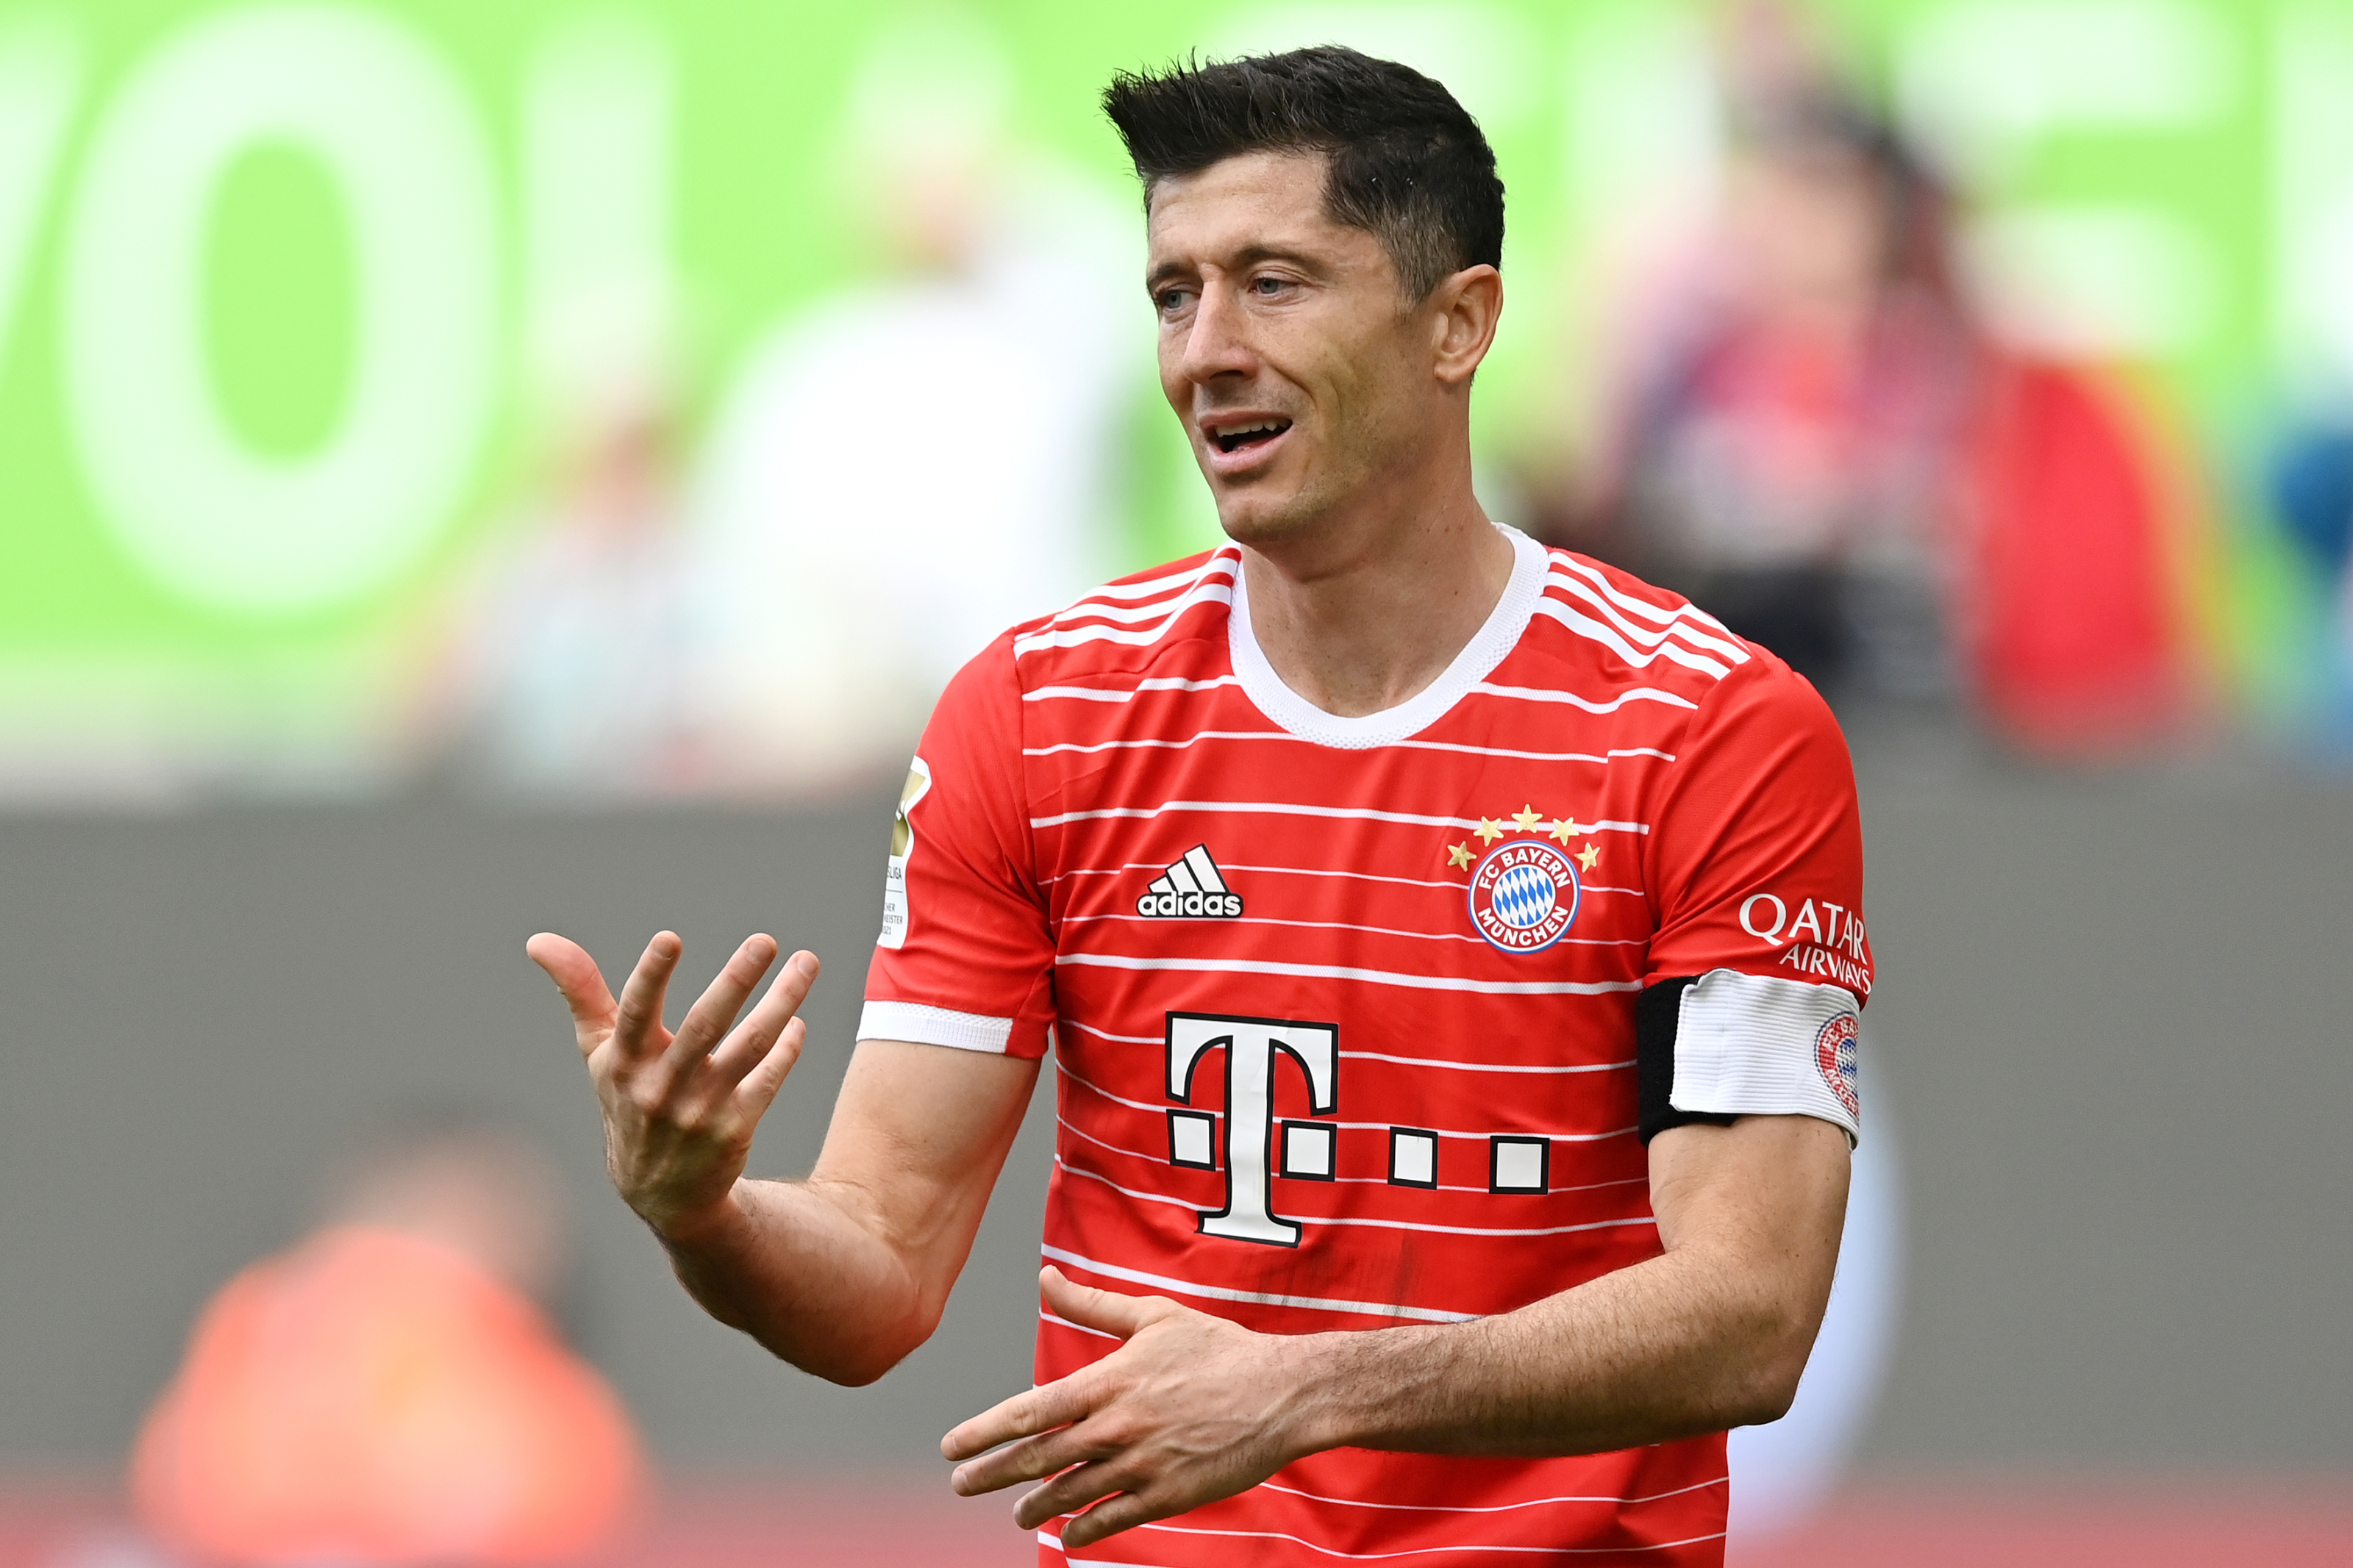 Bundesliga 2022/23: Robert Lewandowski will 'NOT LEAVE' Bayern Munich after signing Sadio Mane from Liverpool, says Sporting Director Hasan Salihamidzic - Check out